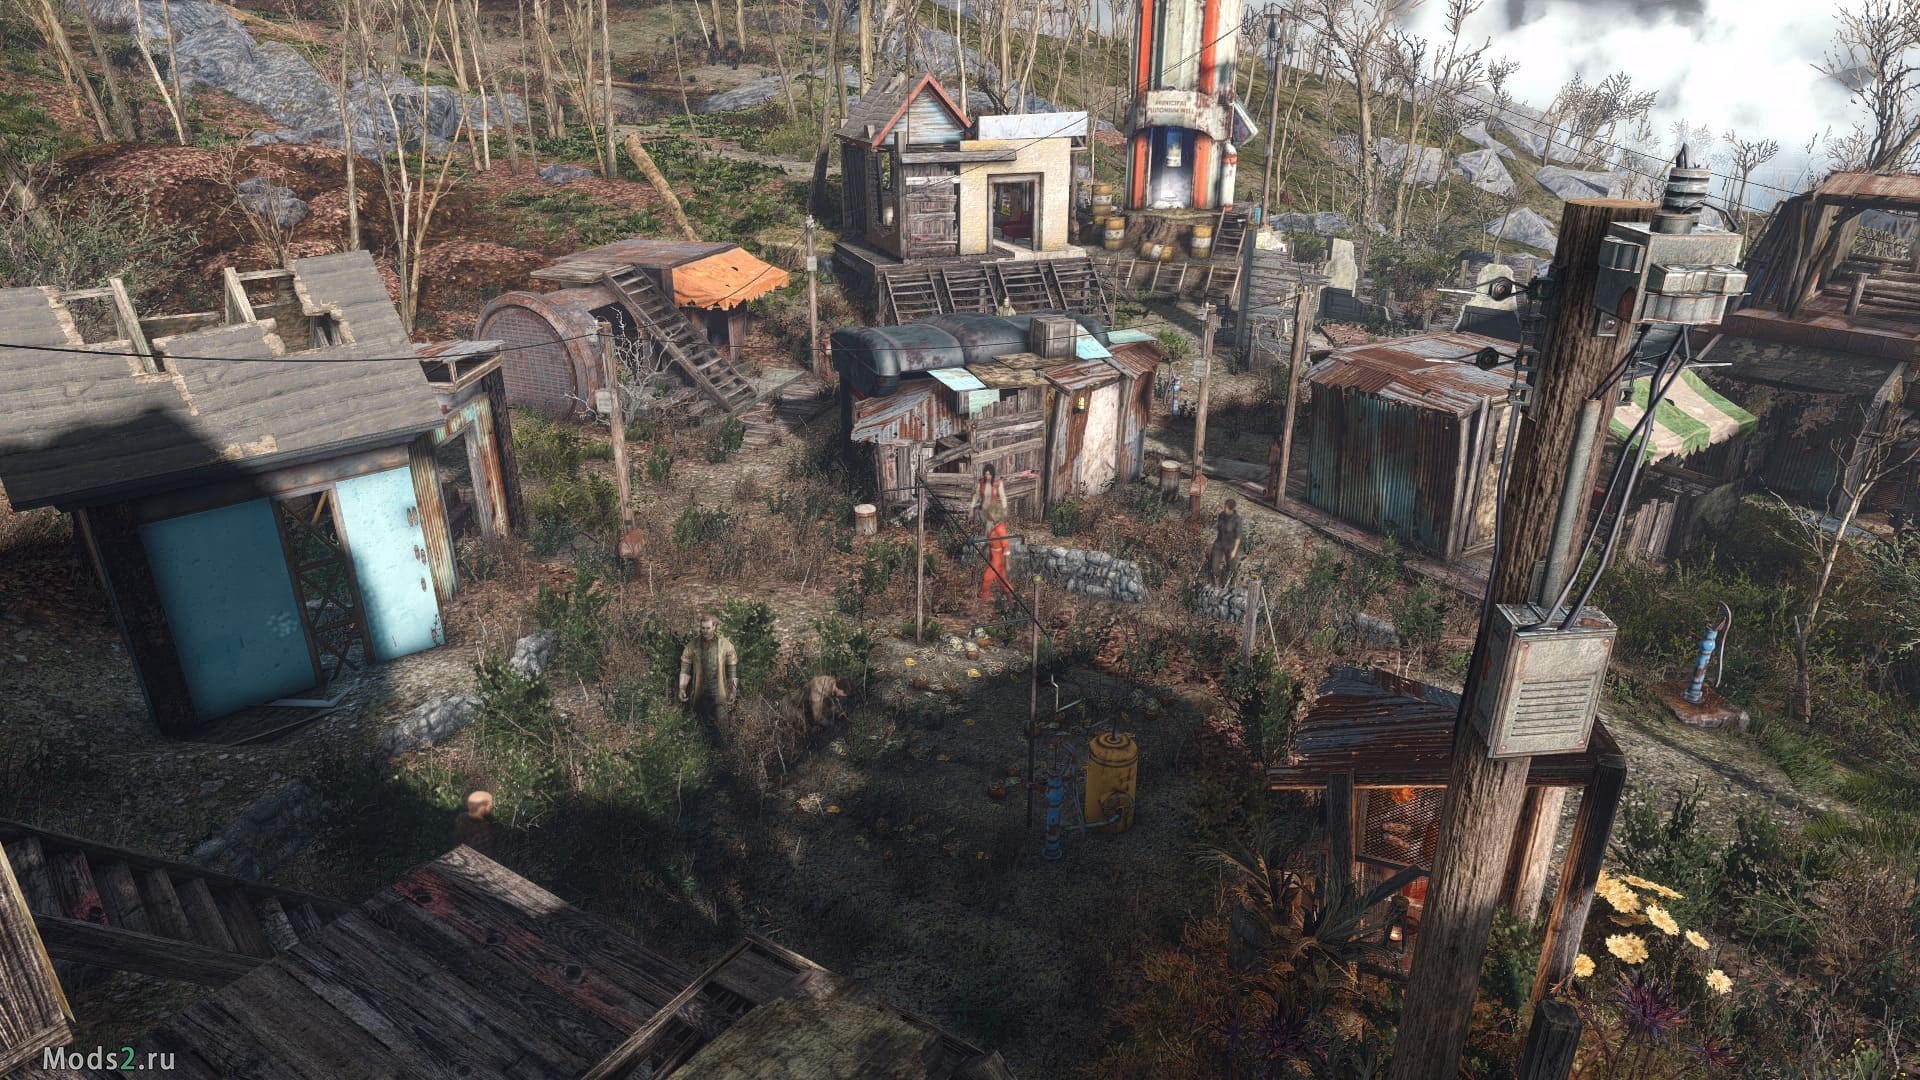 Fallout 4 sim settlements 2 руководство фото 89